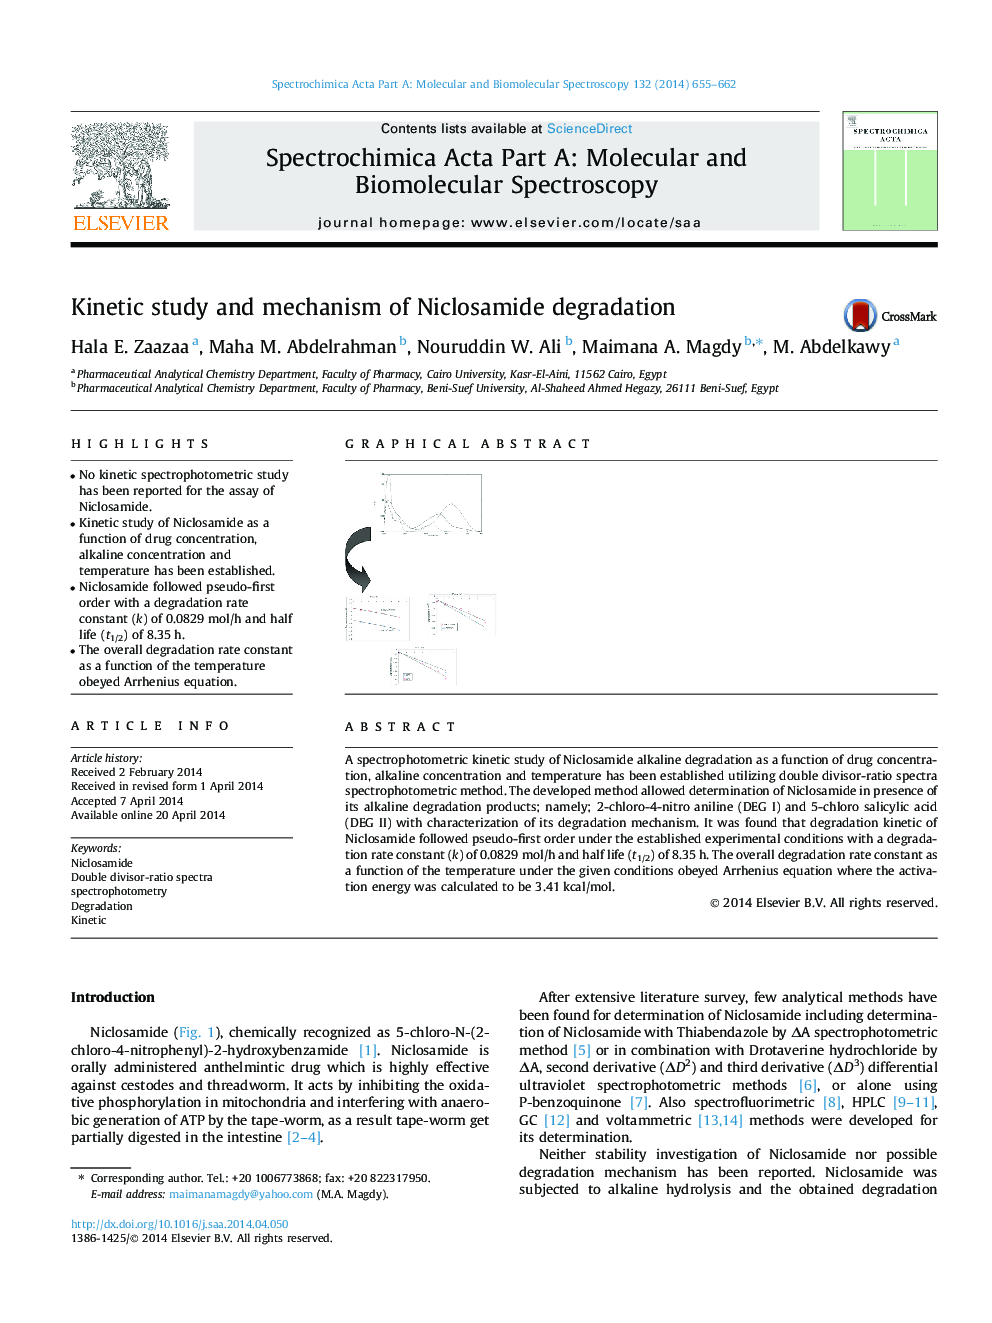 Kinetic study and mechanism of Niclosamide degradation